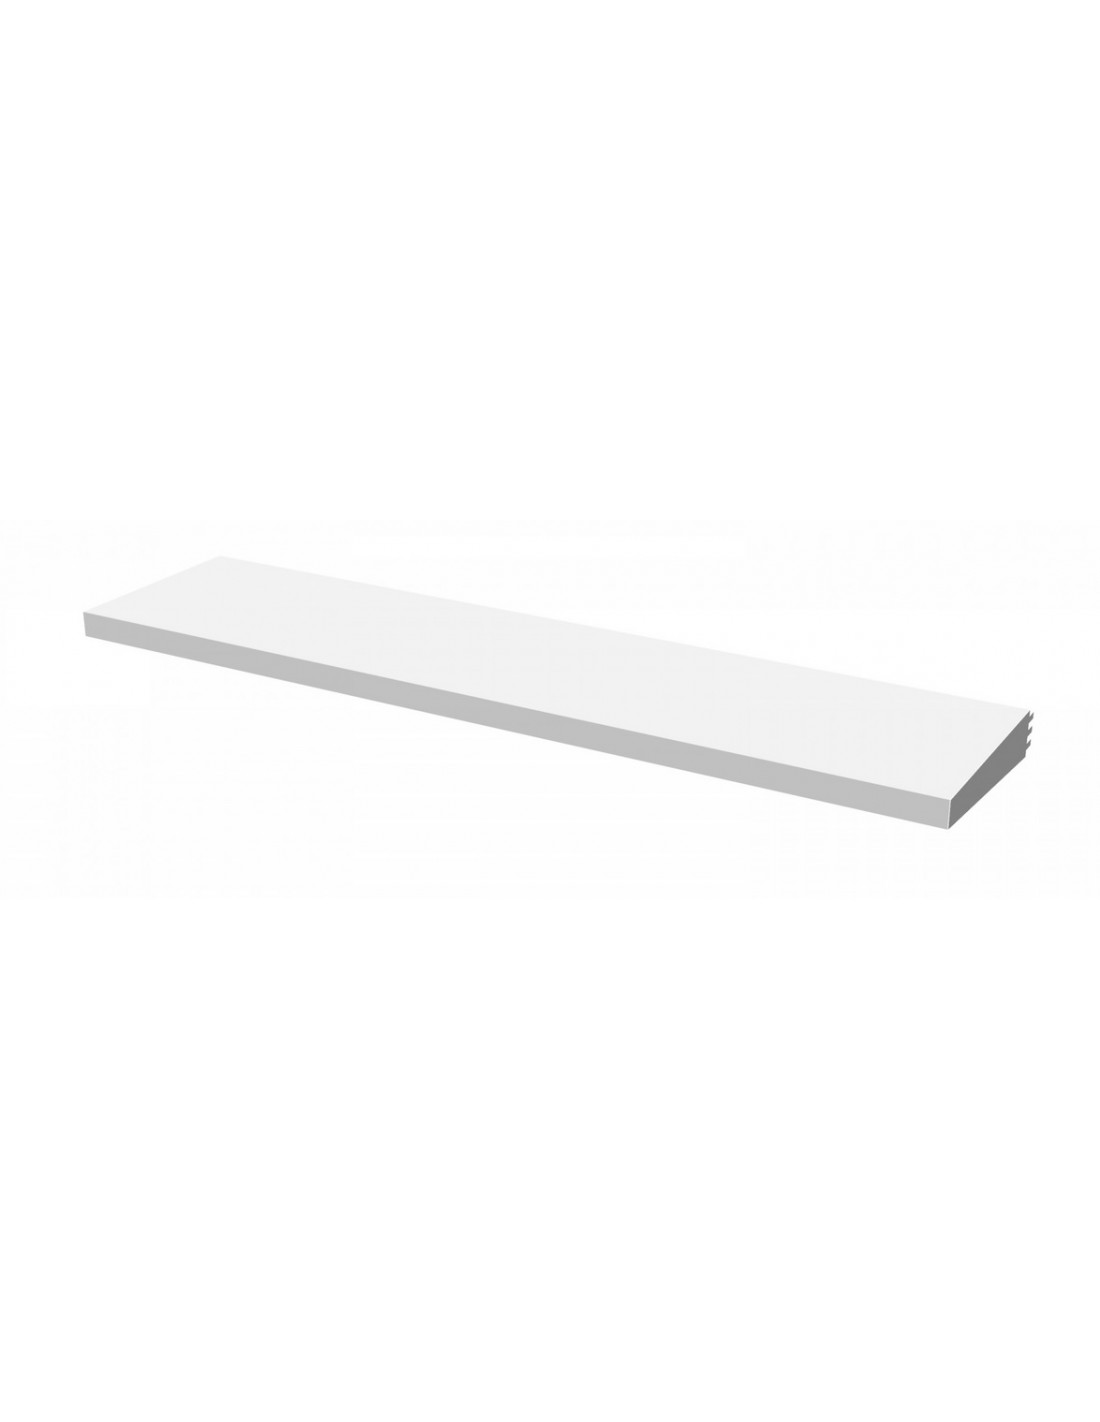 Additional shelf in 125 cm white painted sheet - For mod. VULCANO 80 (n.2 for mod. VULCANO80 250)